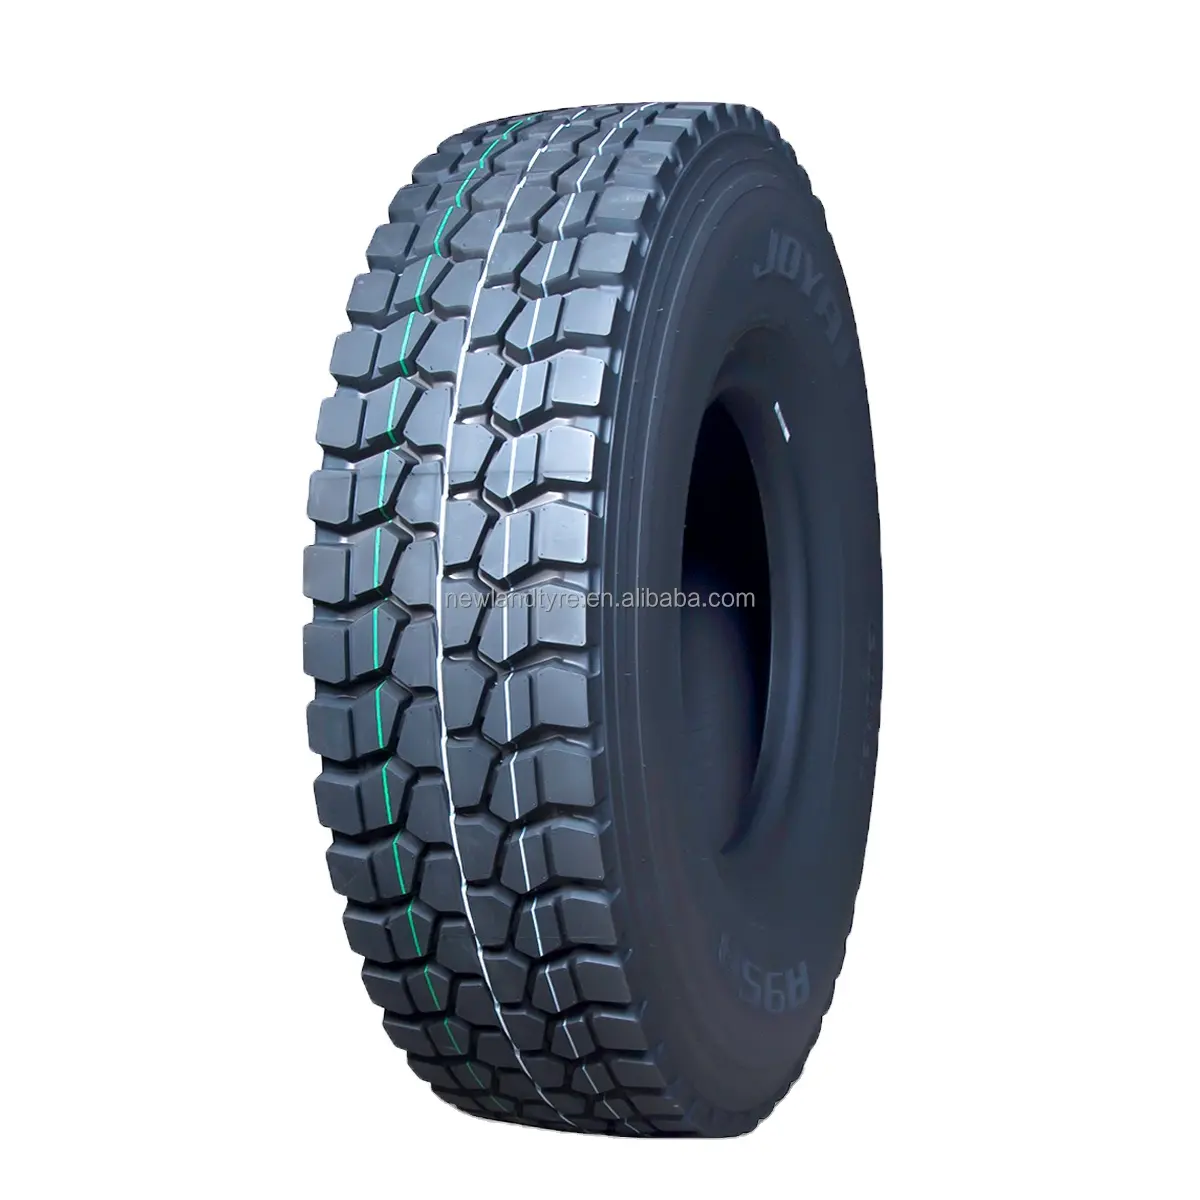 American truck pneus 295/75r22.5 marques de pneus fabriqués en chine thaïlande marques de pneus